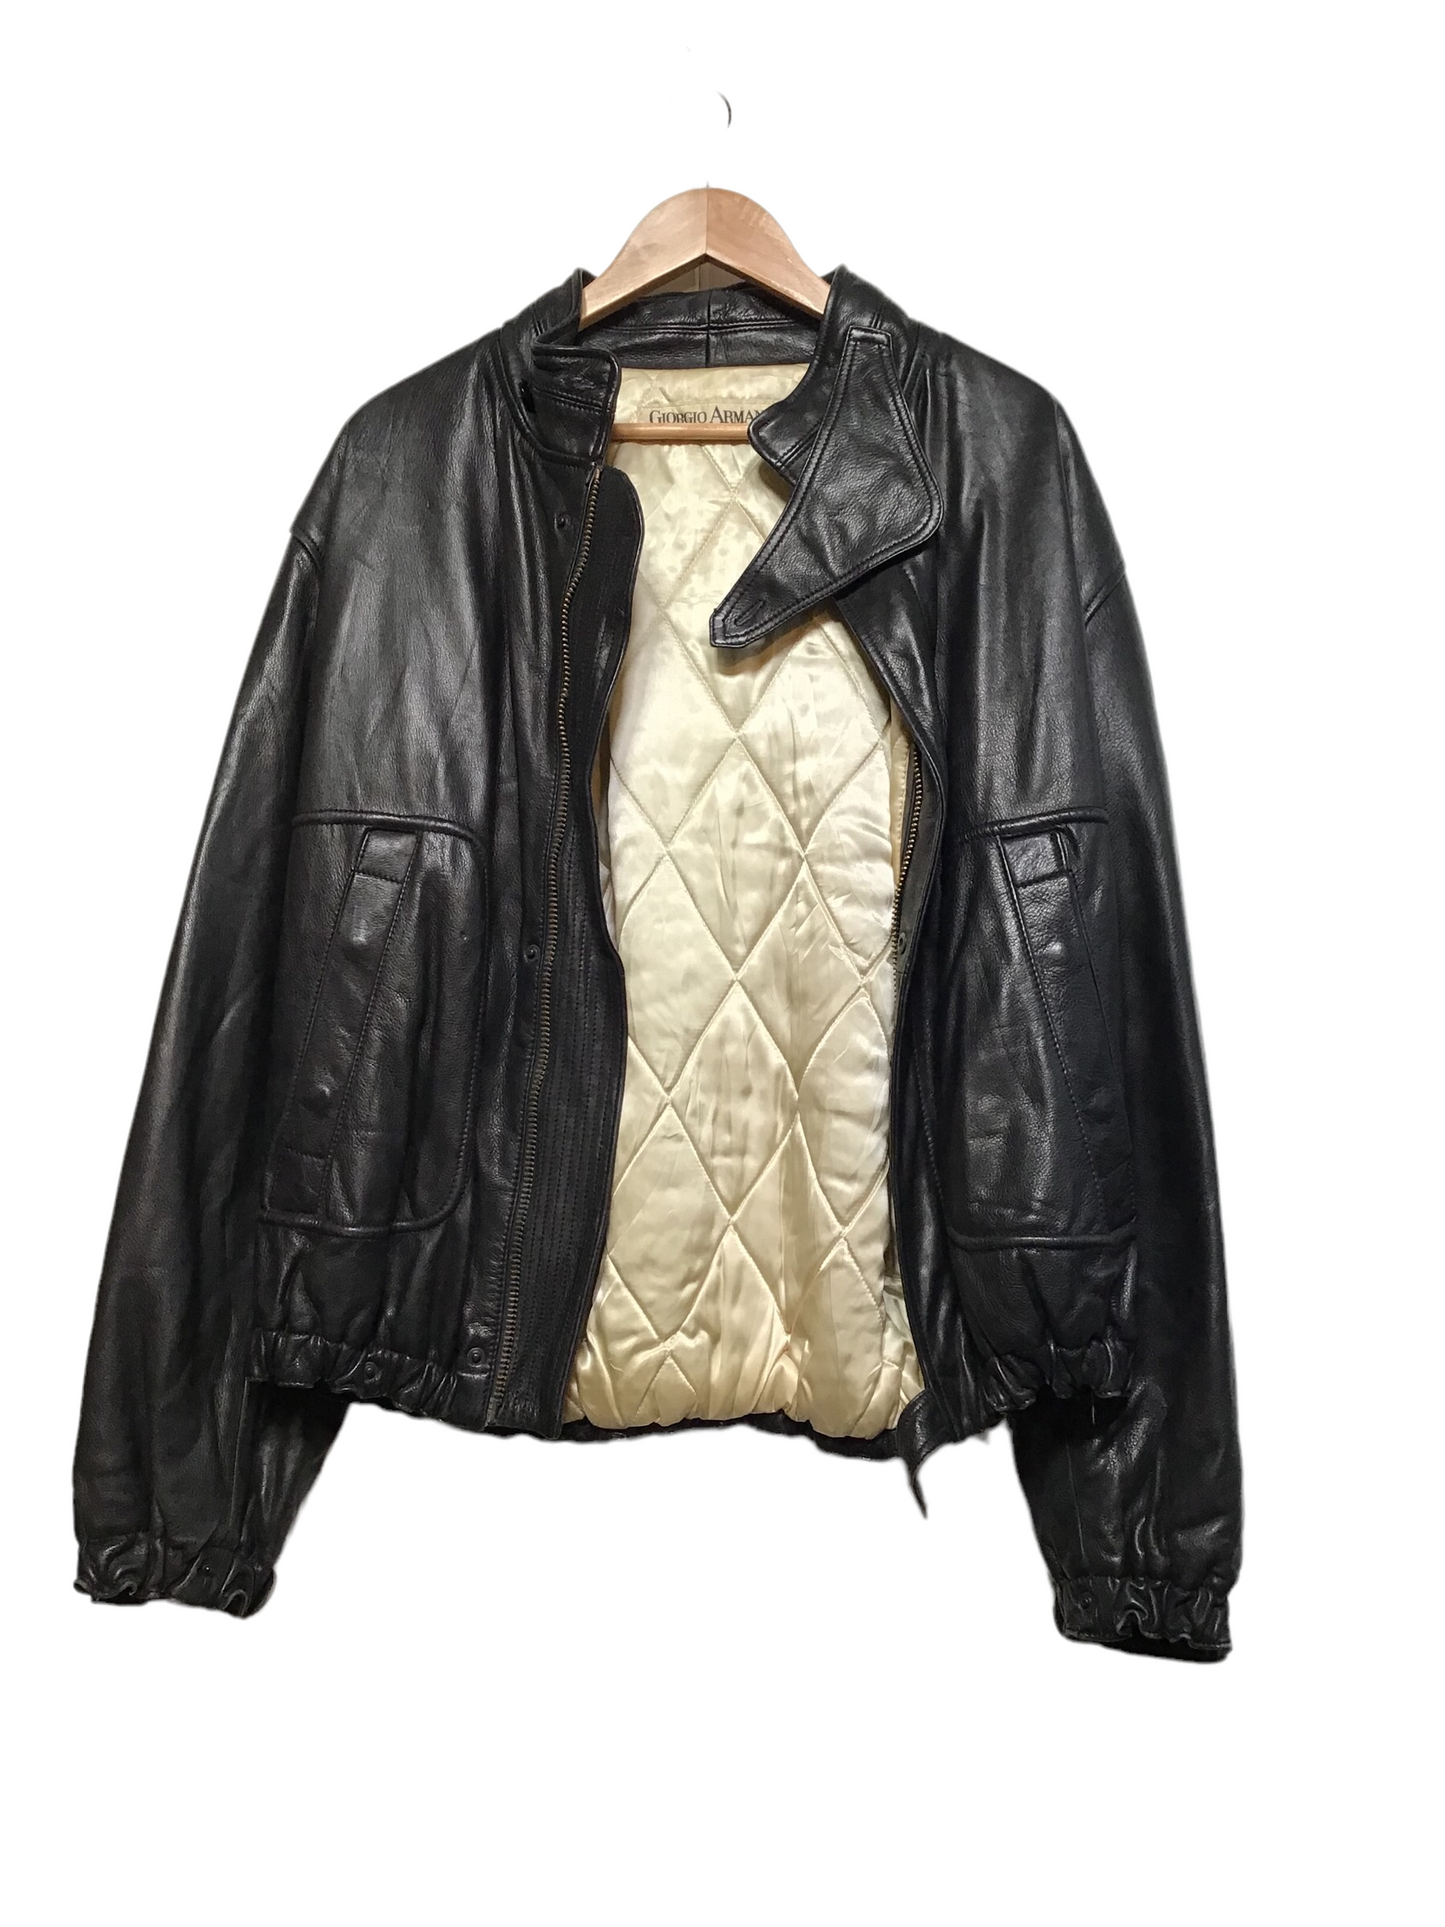 Giorgio Armani Biker Leather Jacket (Size M)